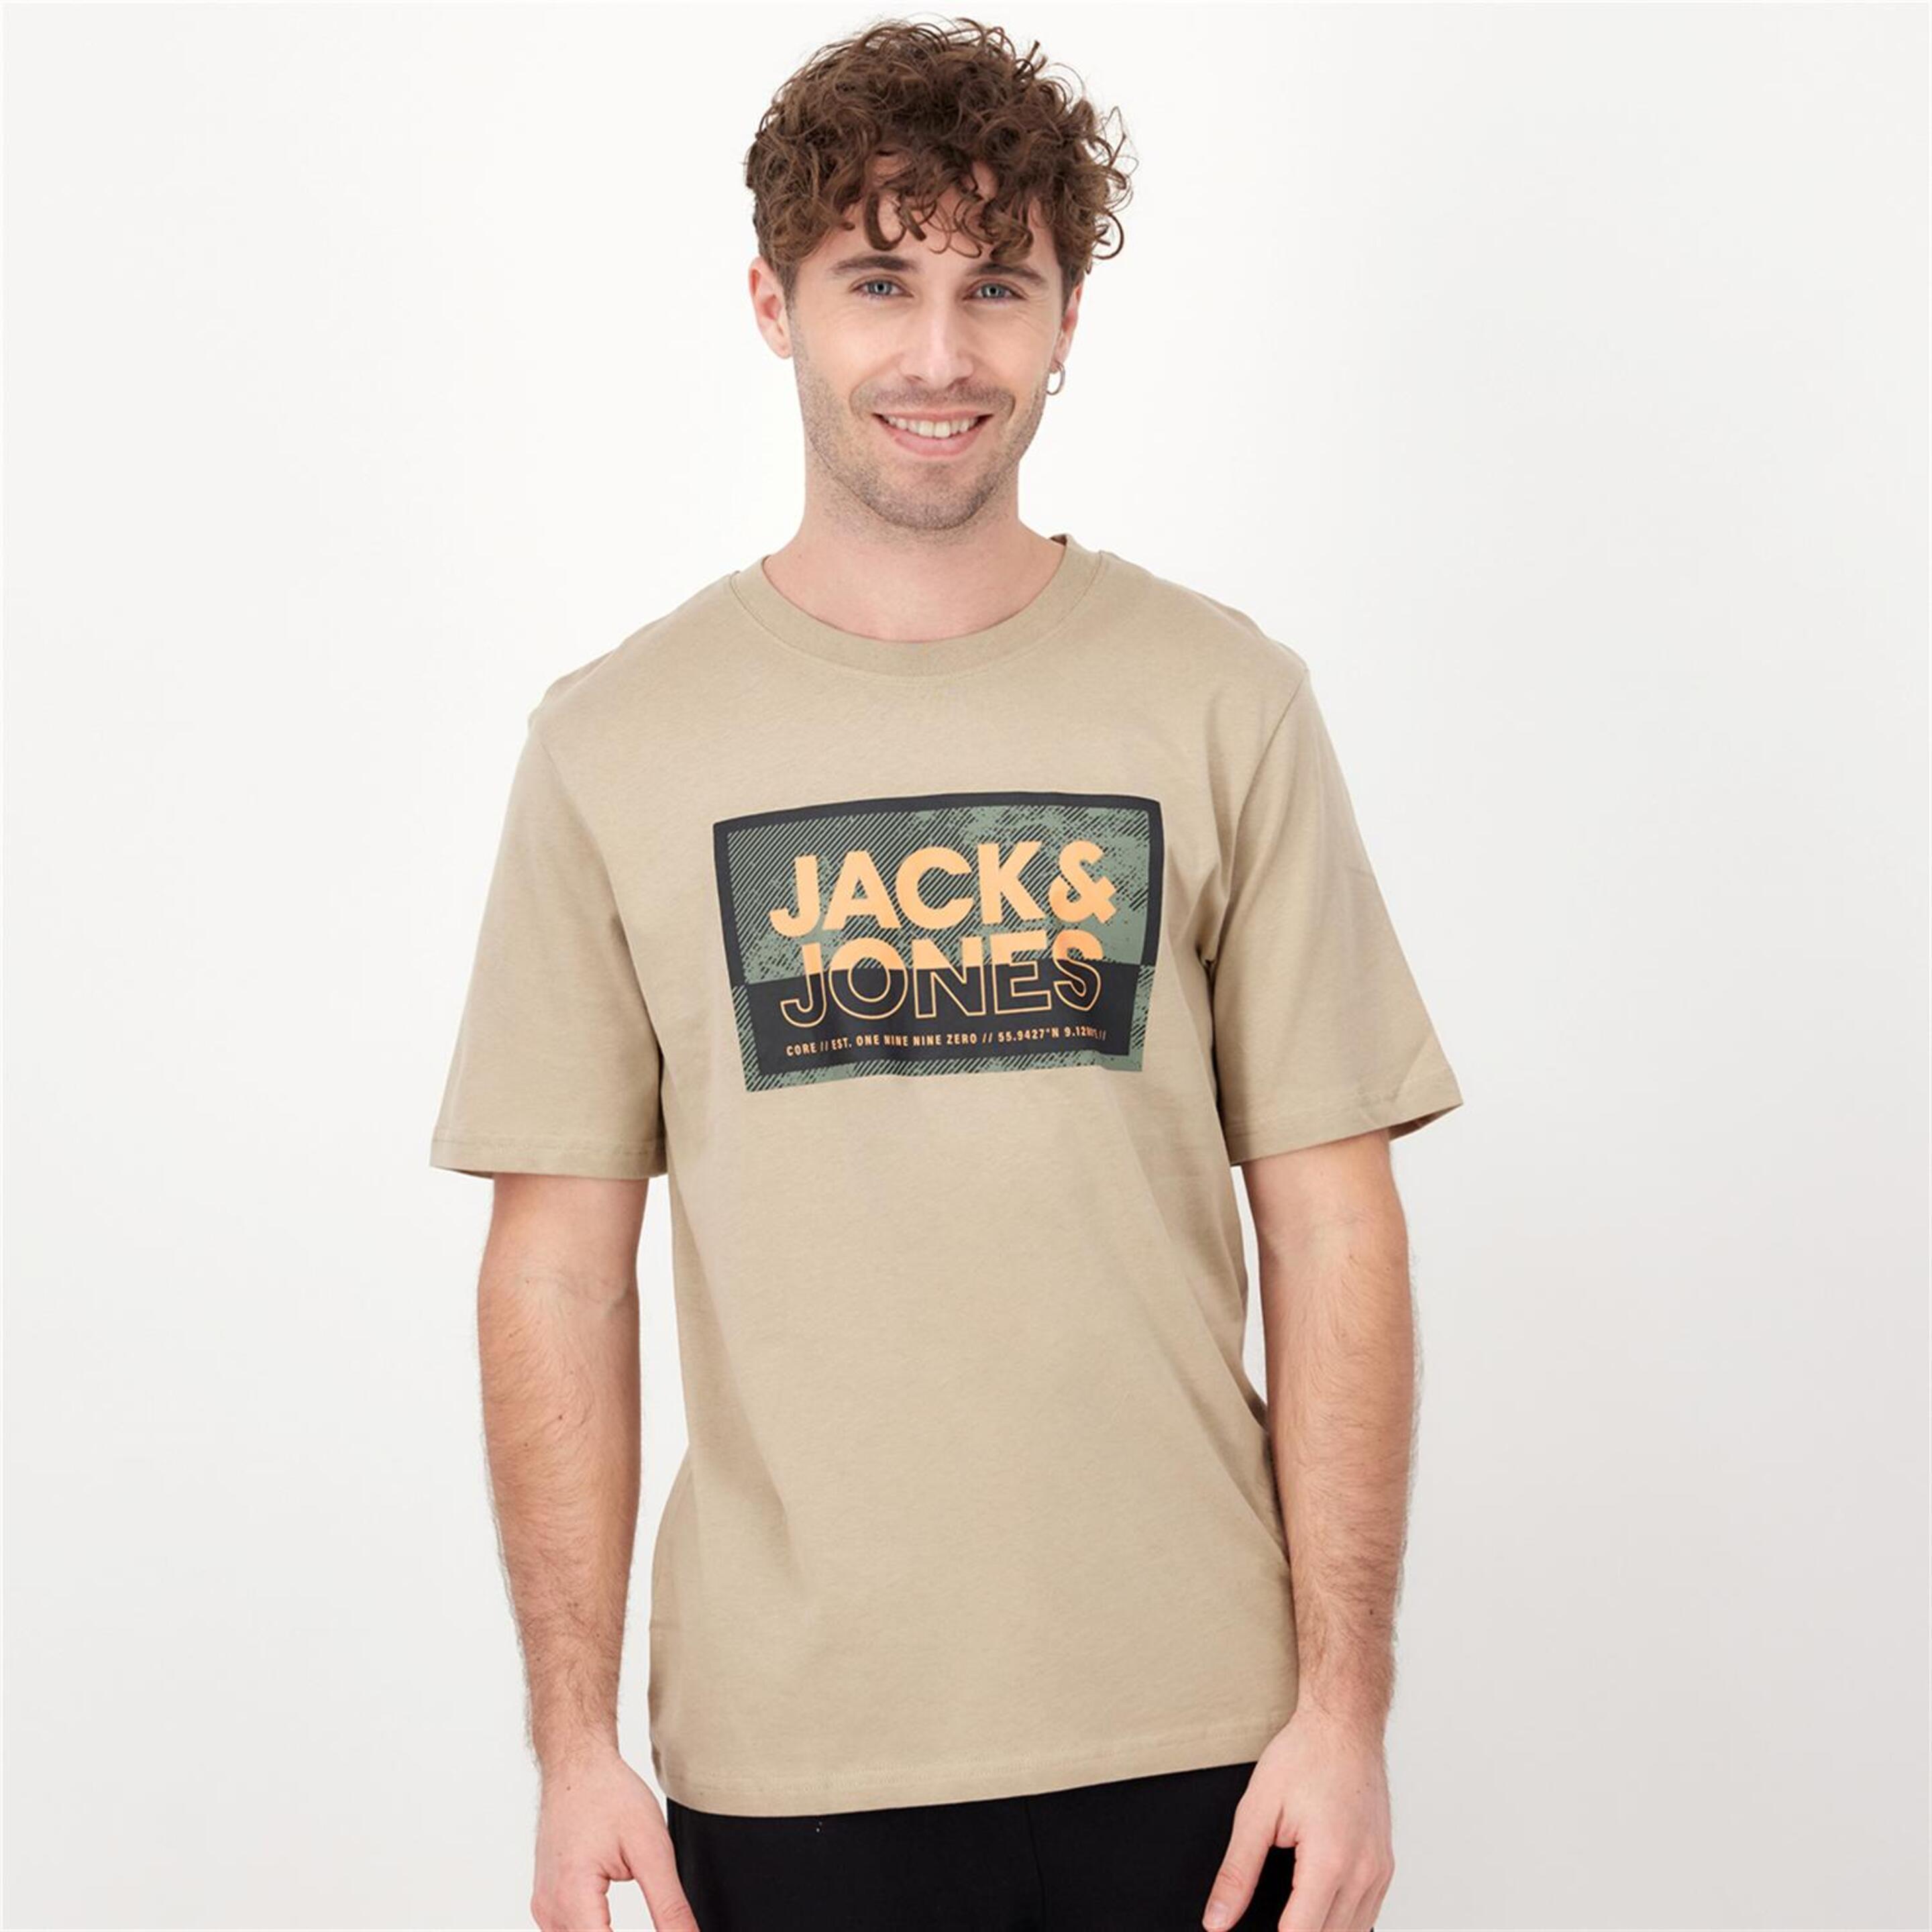 Jack & Jones Logan - marron - Camiseta Hombre